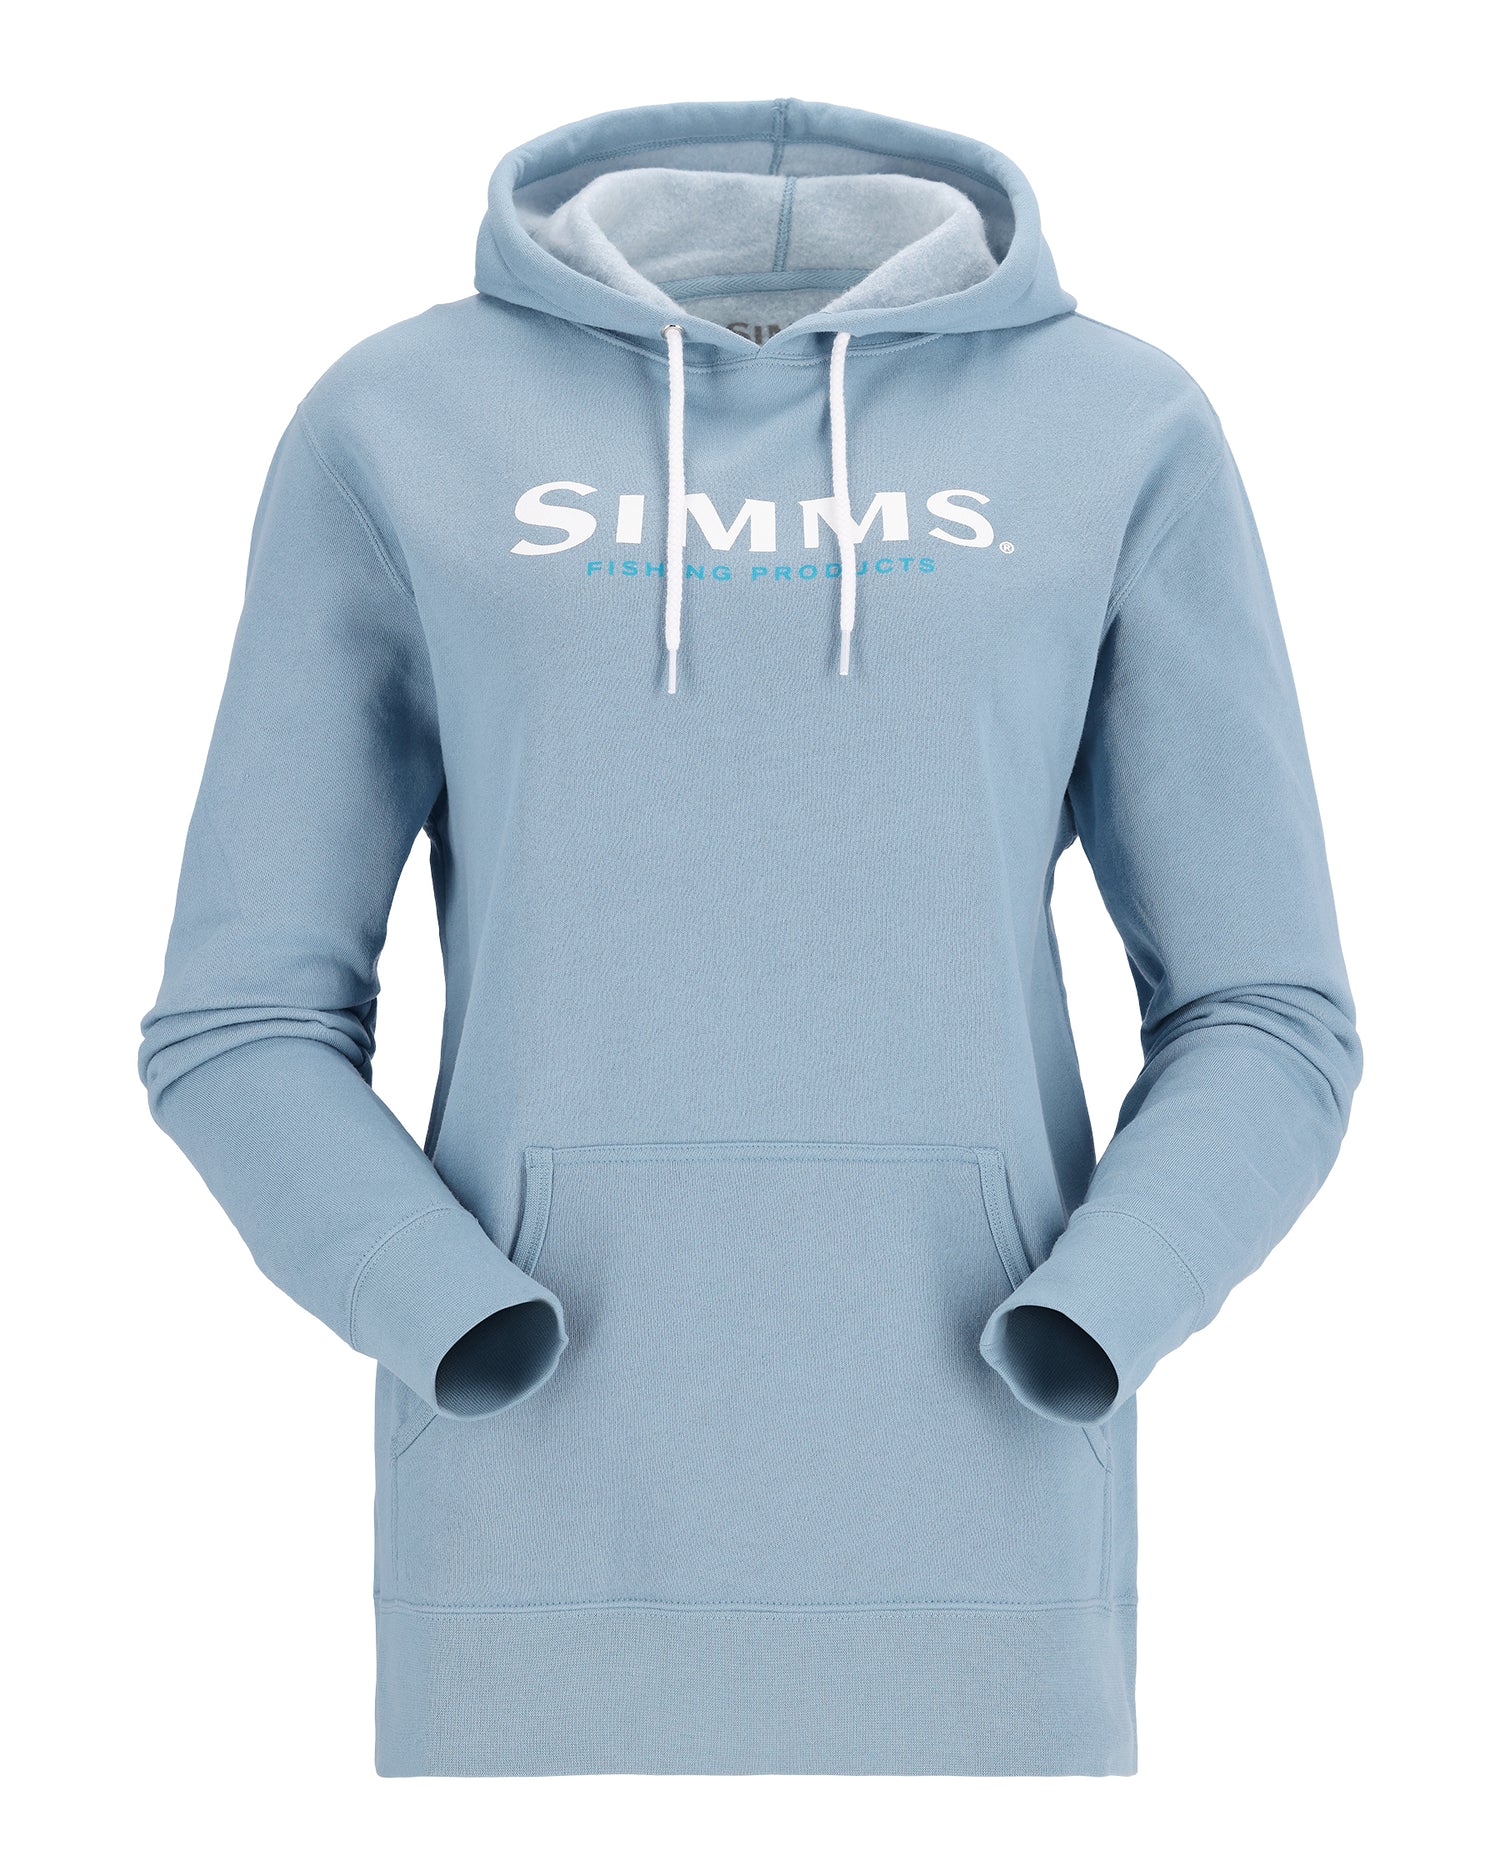 13631-435-simms-logo-hoody-mannequin